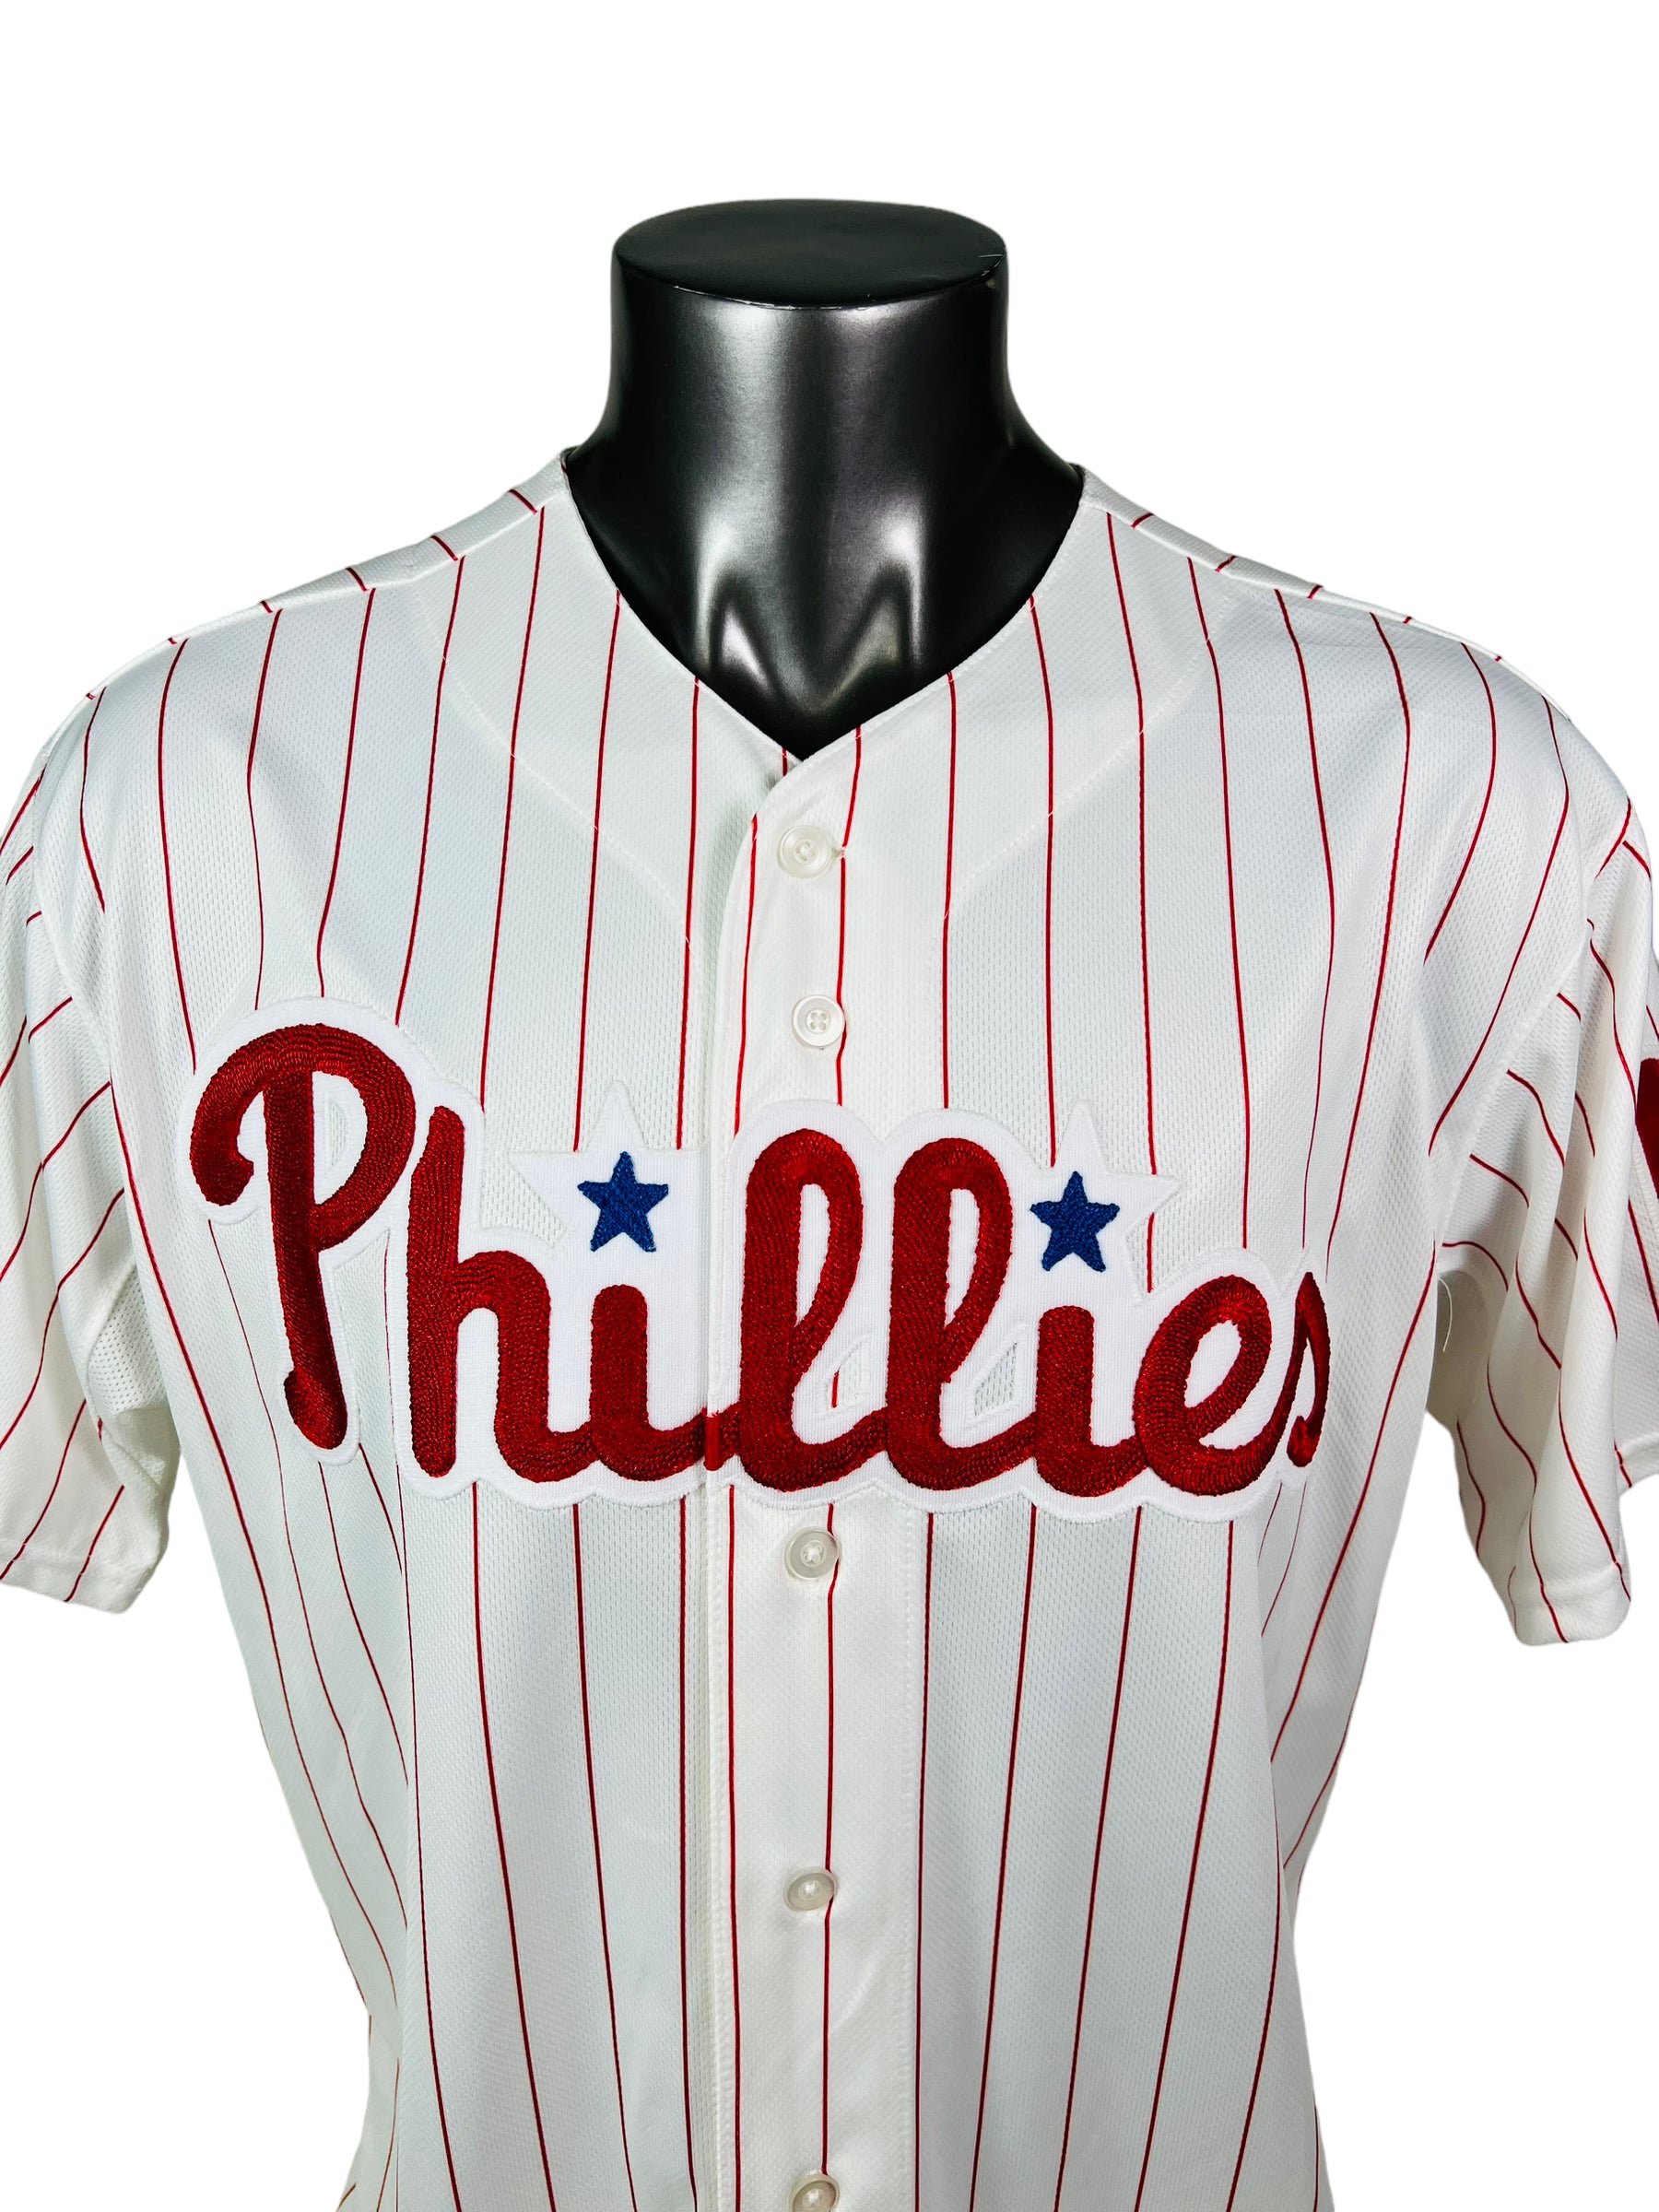 Mitchell & Ness MLB Philadelphia Phillies Mickey Morandini Baseball Jersey